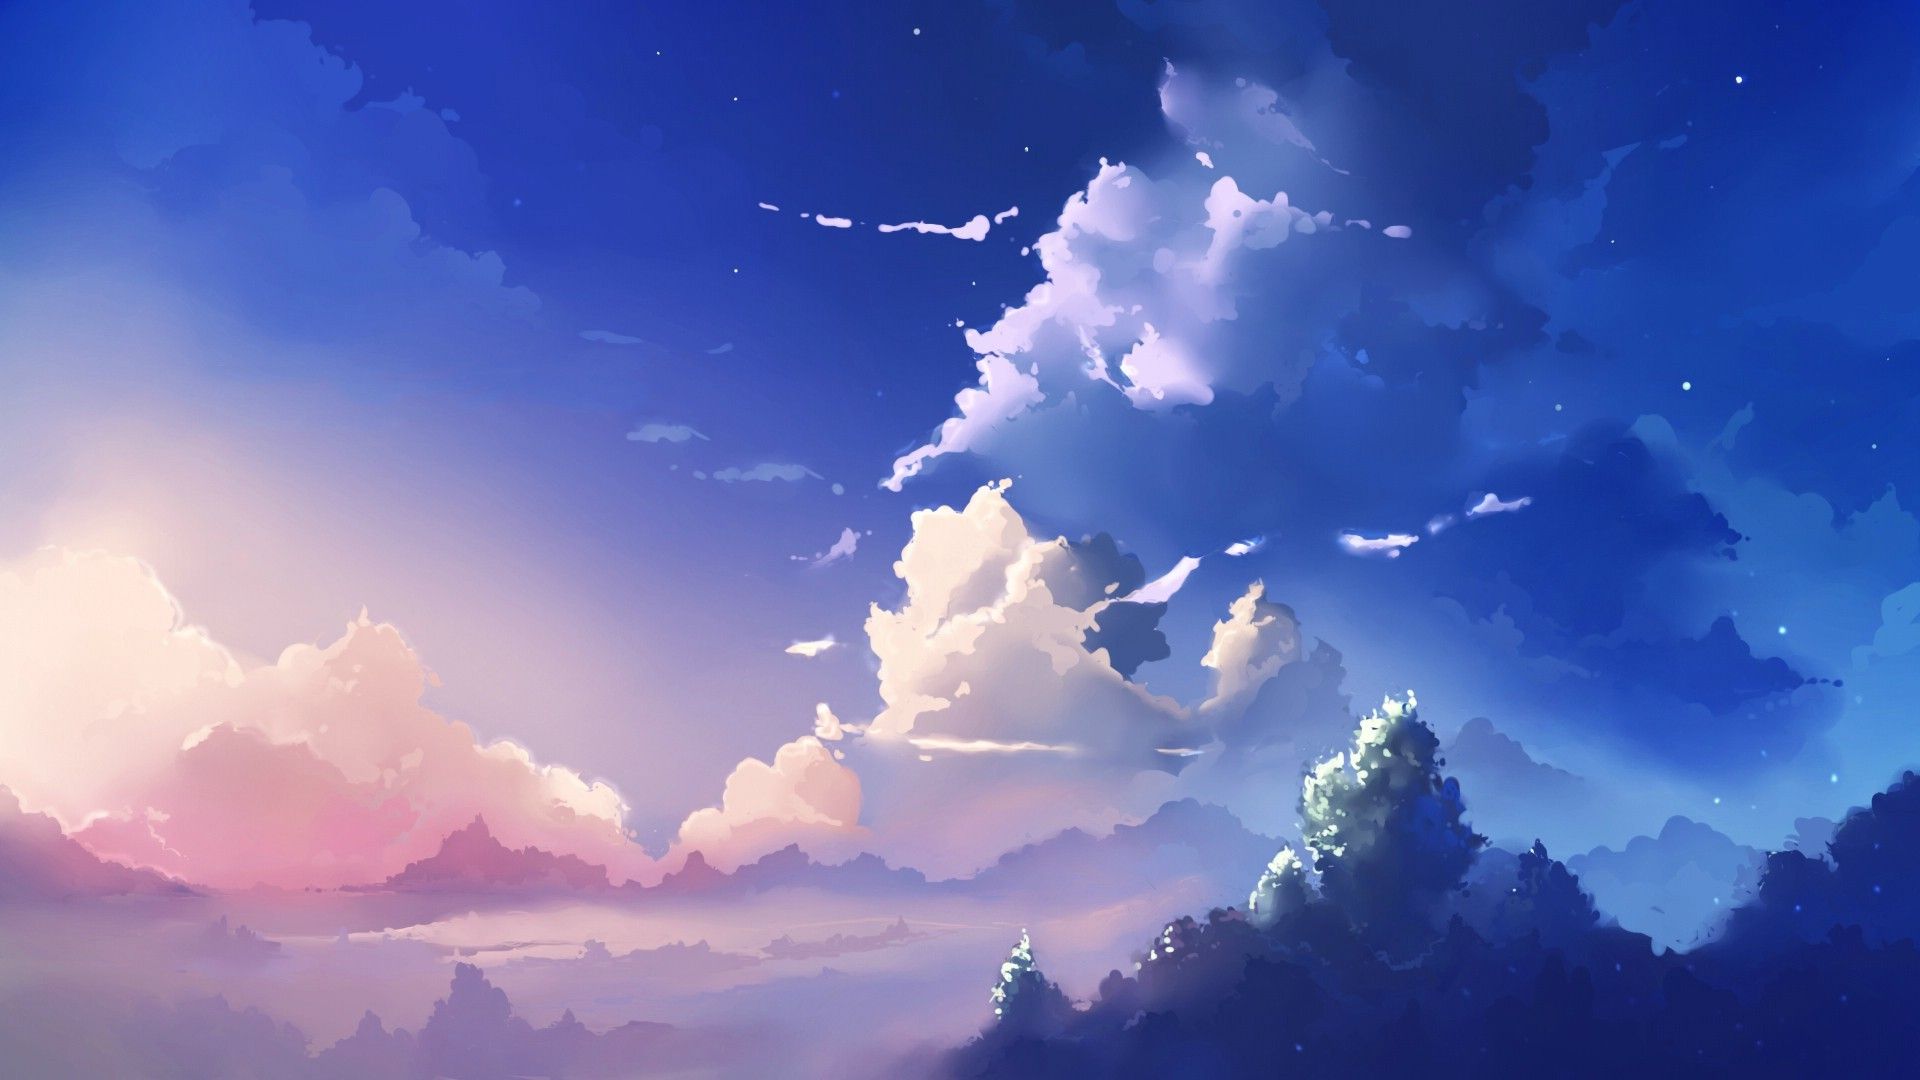 Anime Sky Scenery, Cloud Scenery 05 | wapelper.com